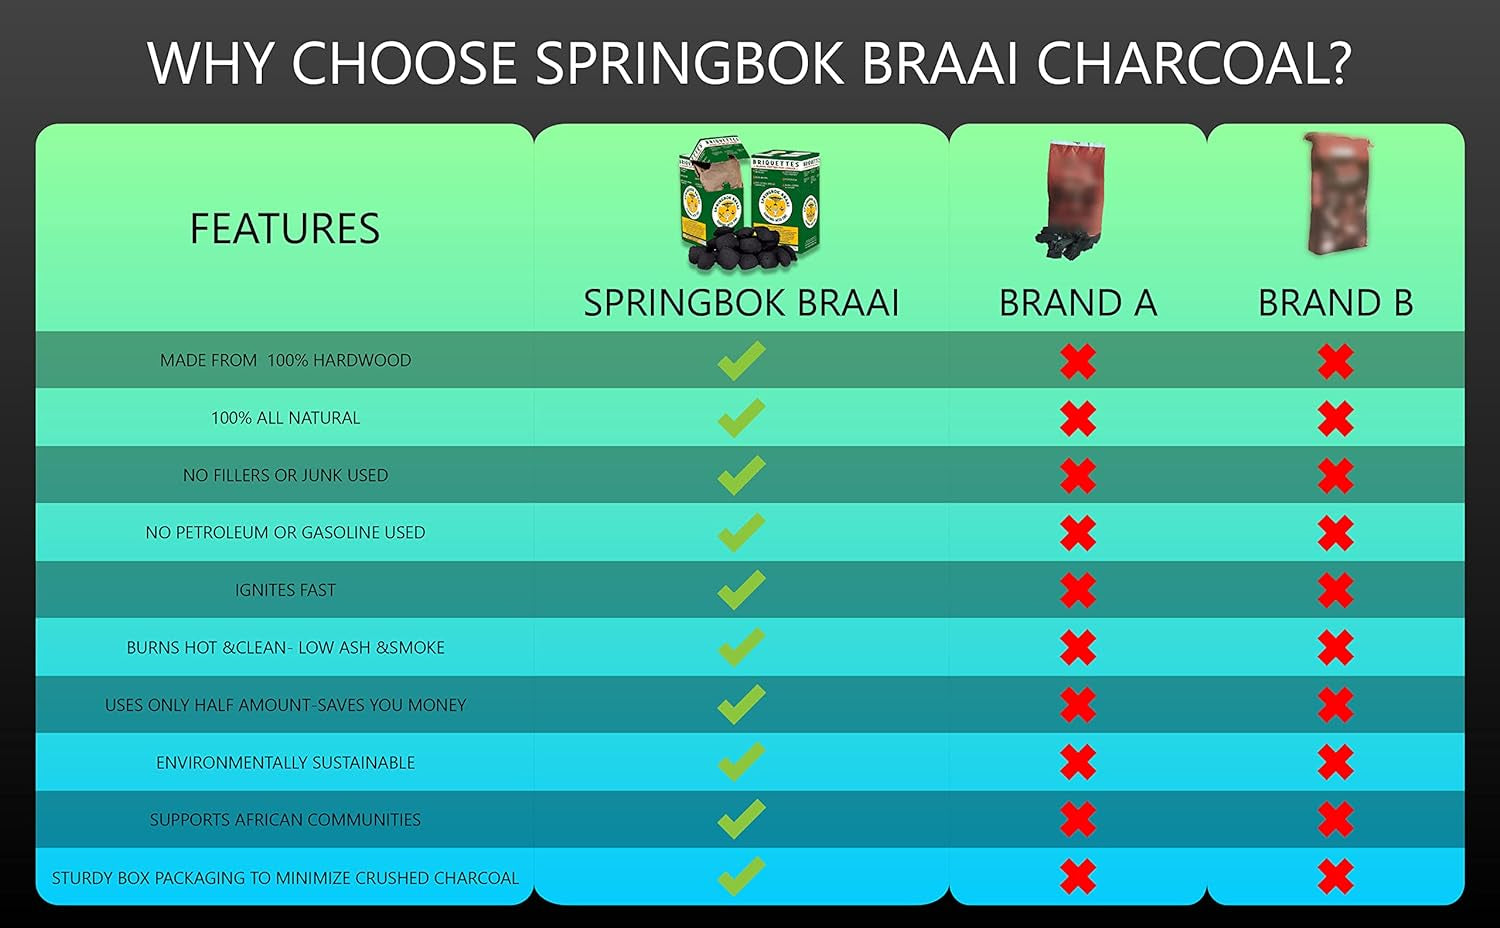 Springbok Braai Charcoal